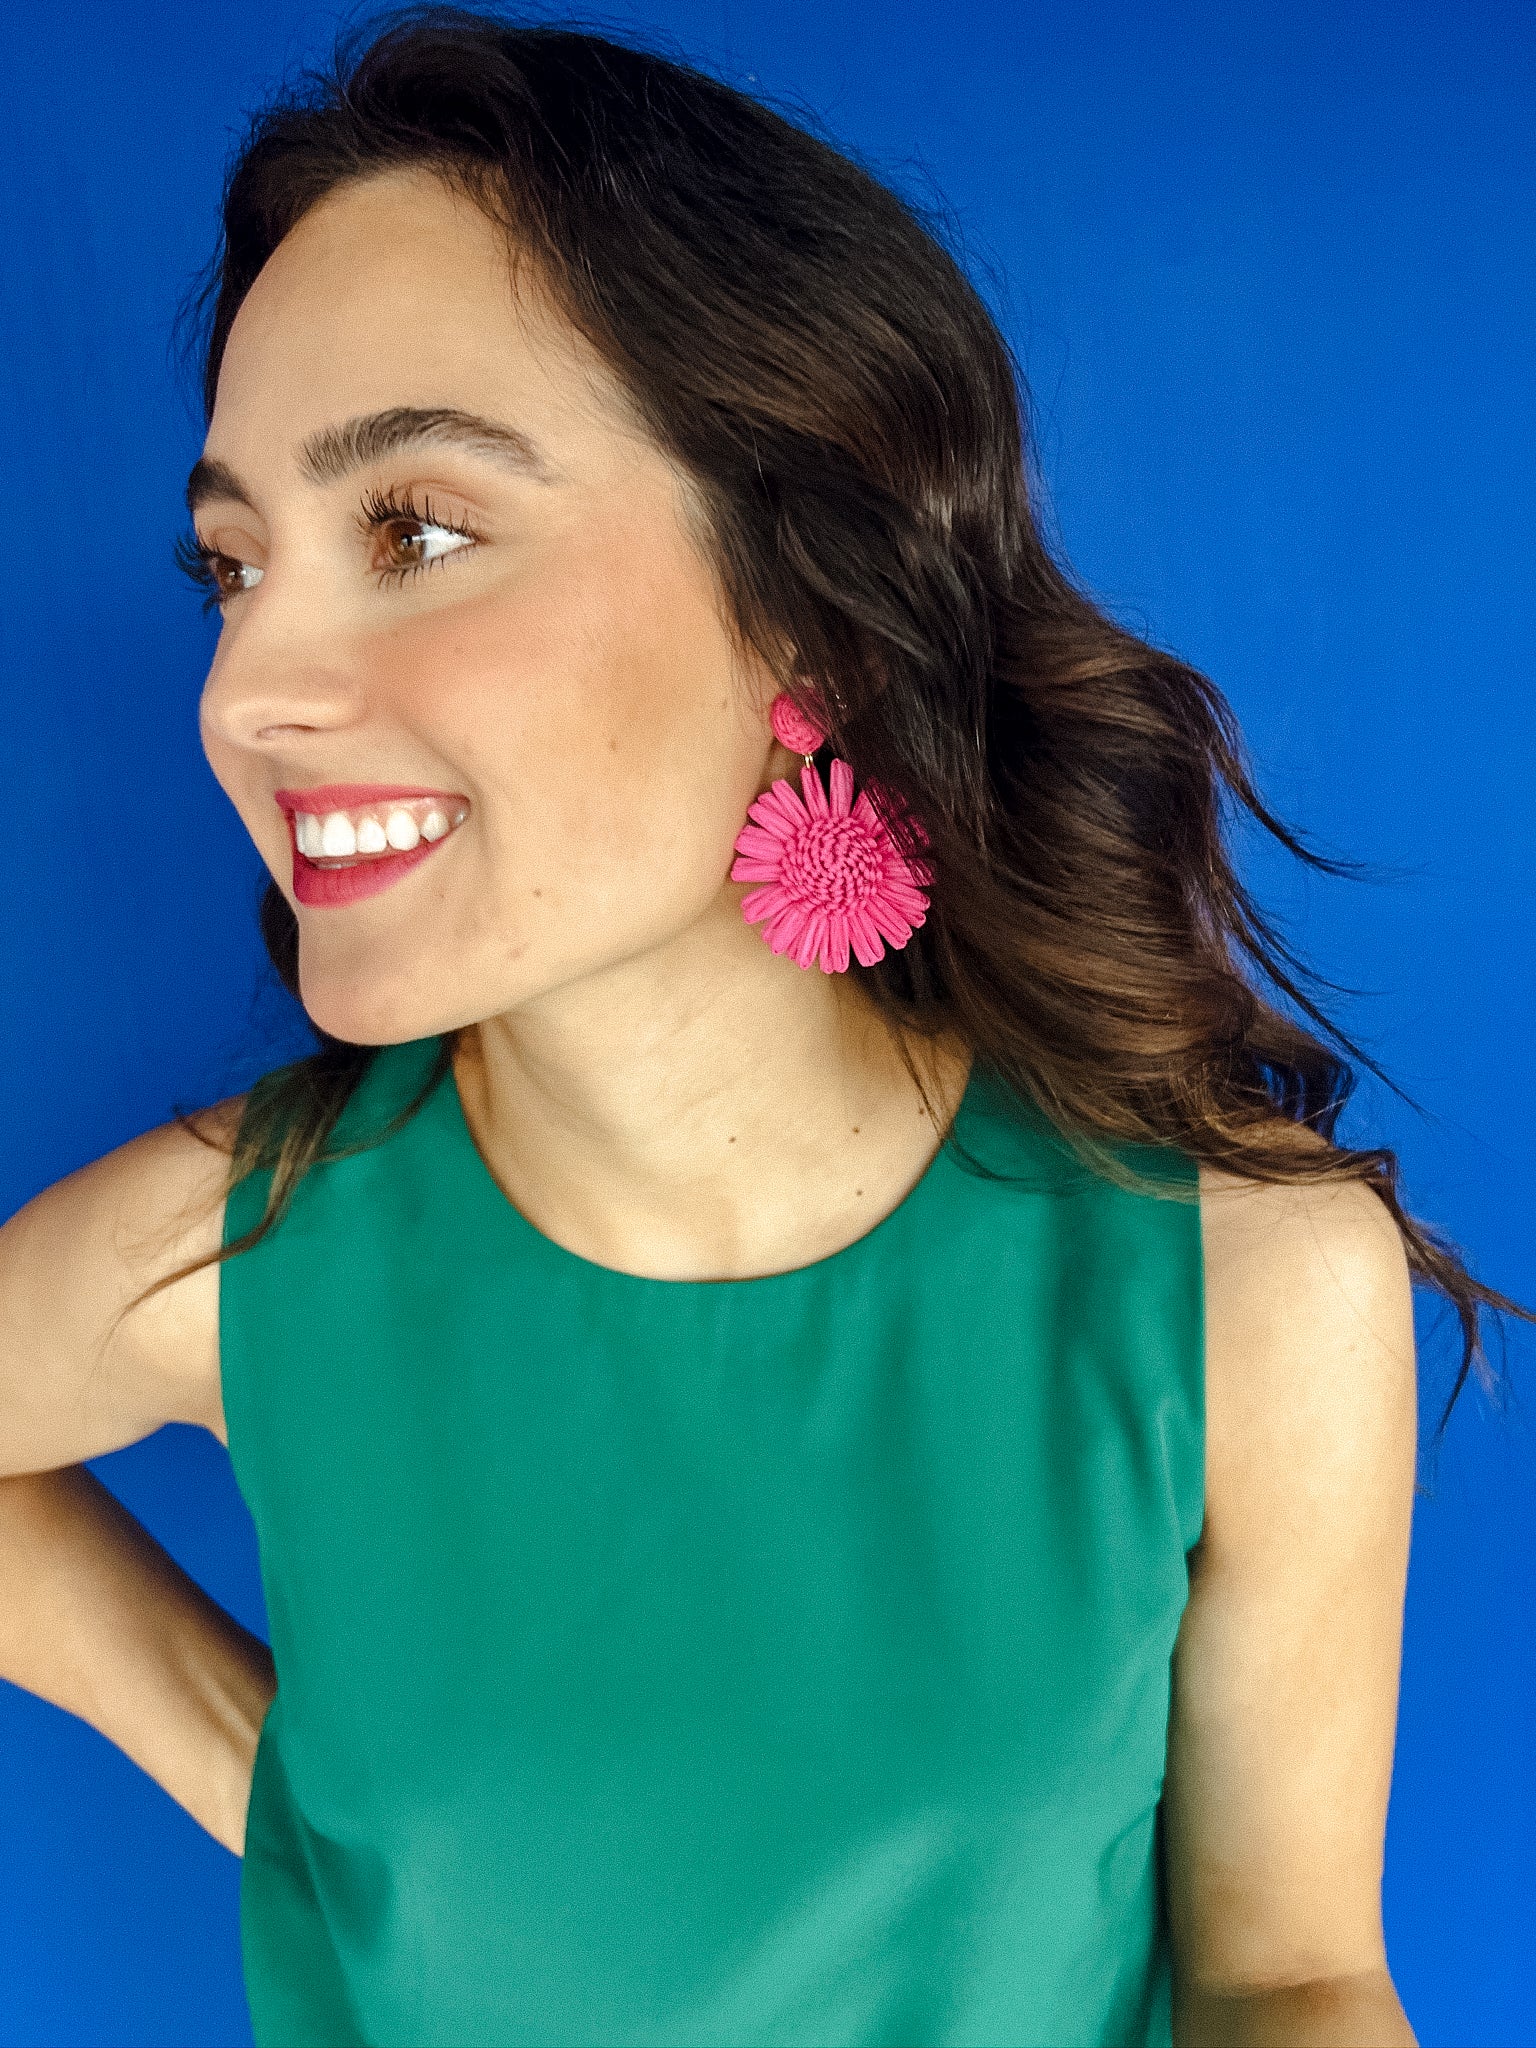 Betsy Flower Earrings -  Raspberry